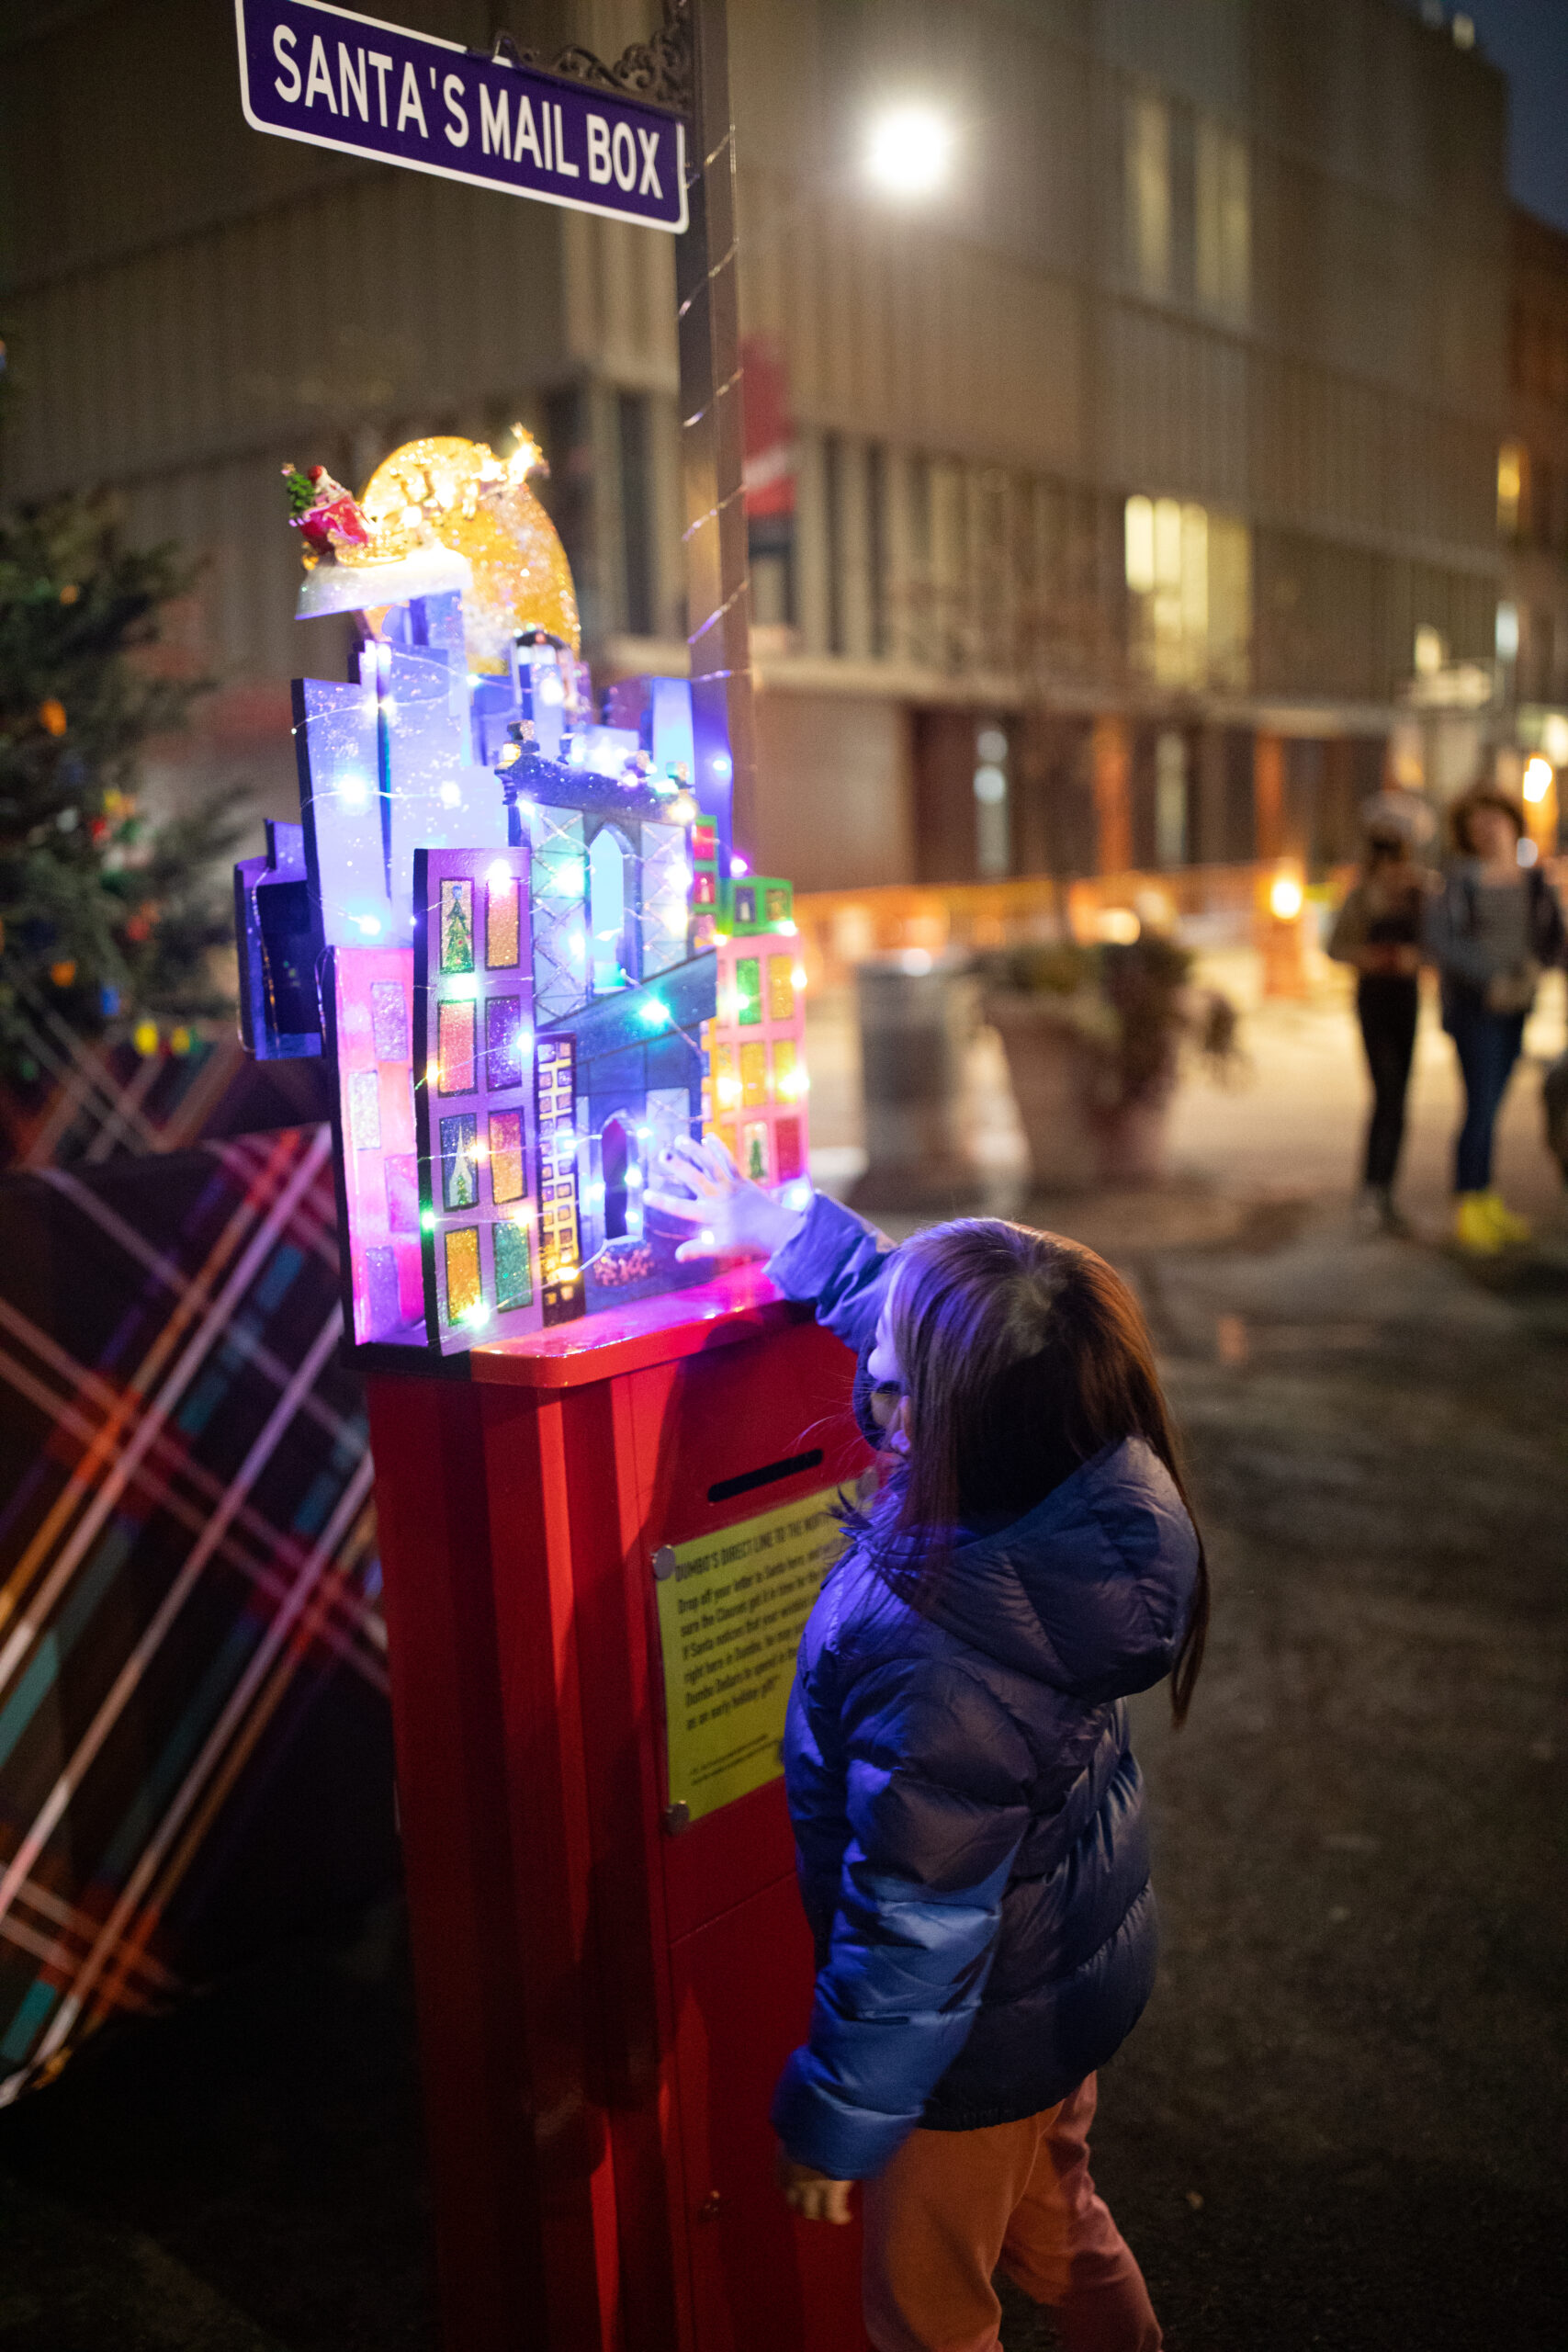 NYC DUMBO Improvement District - Small Business & Community - Community - Christmas Santa's Mail Box